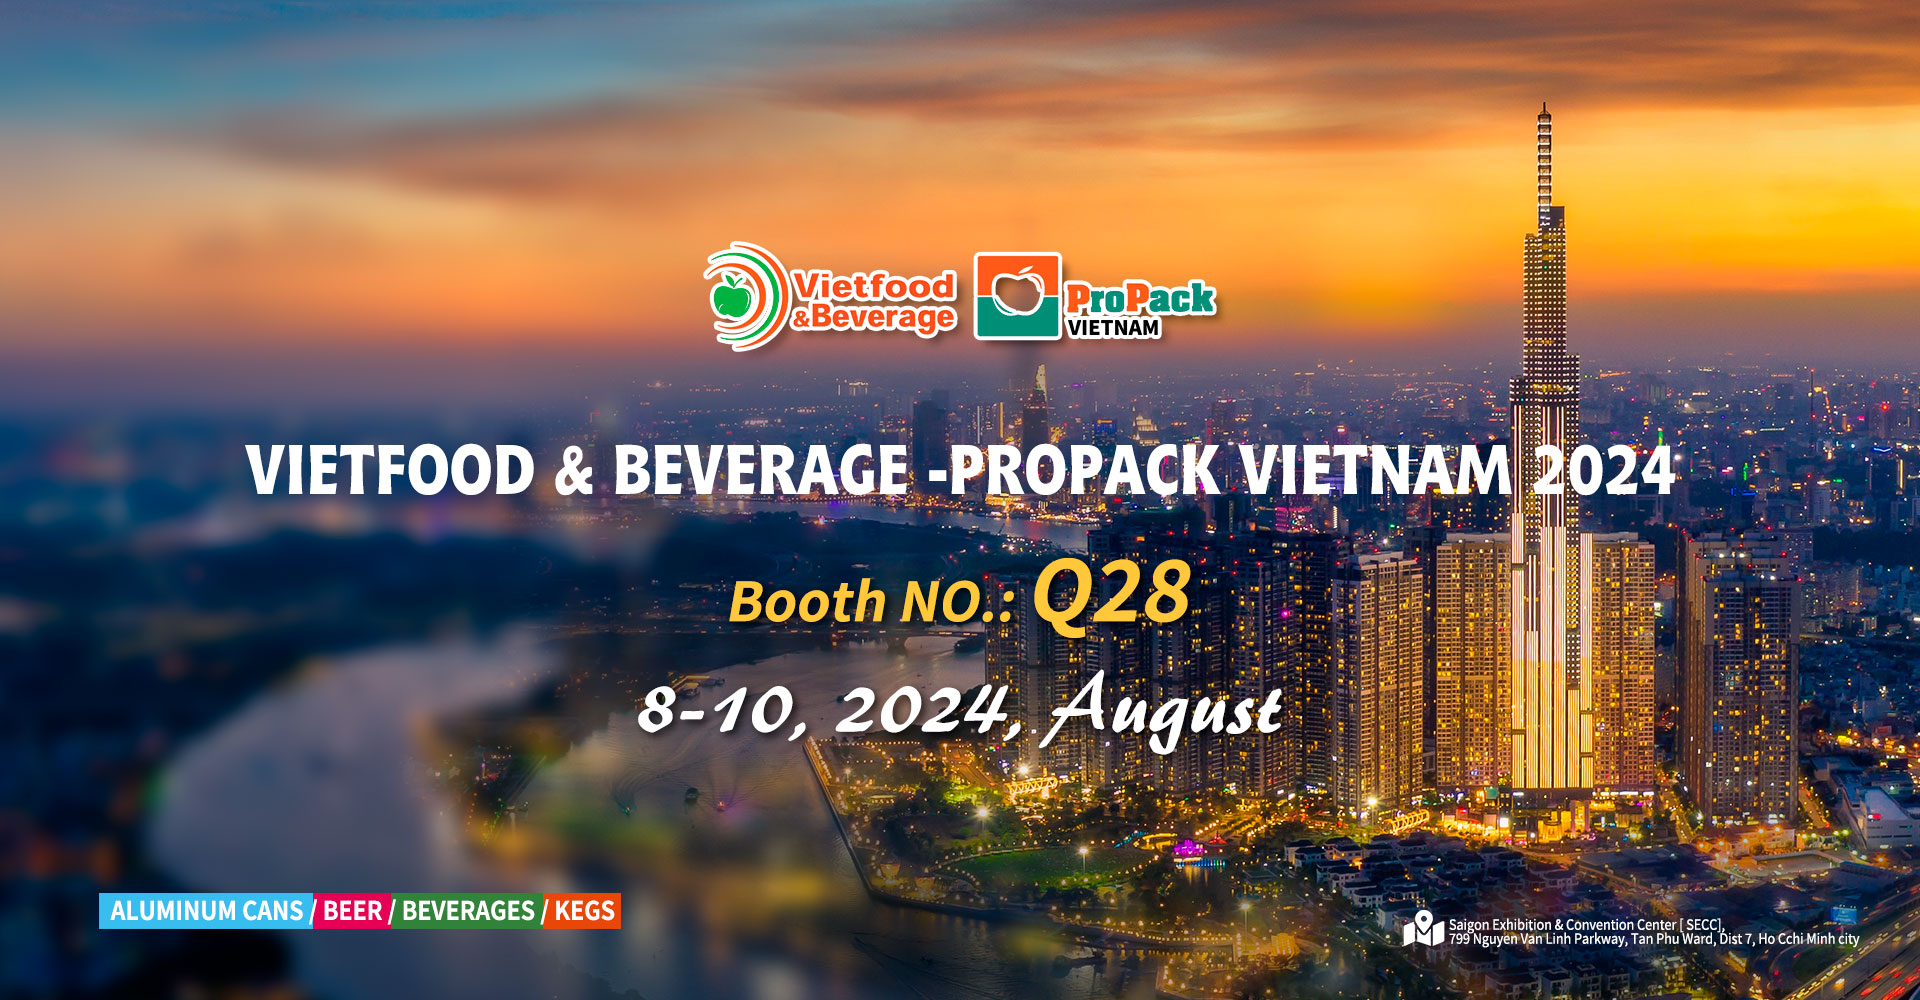 Vietnam Food and beverage packaging exhibition